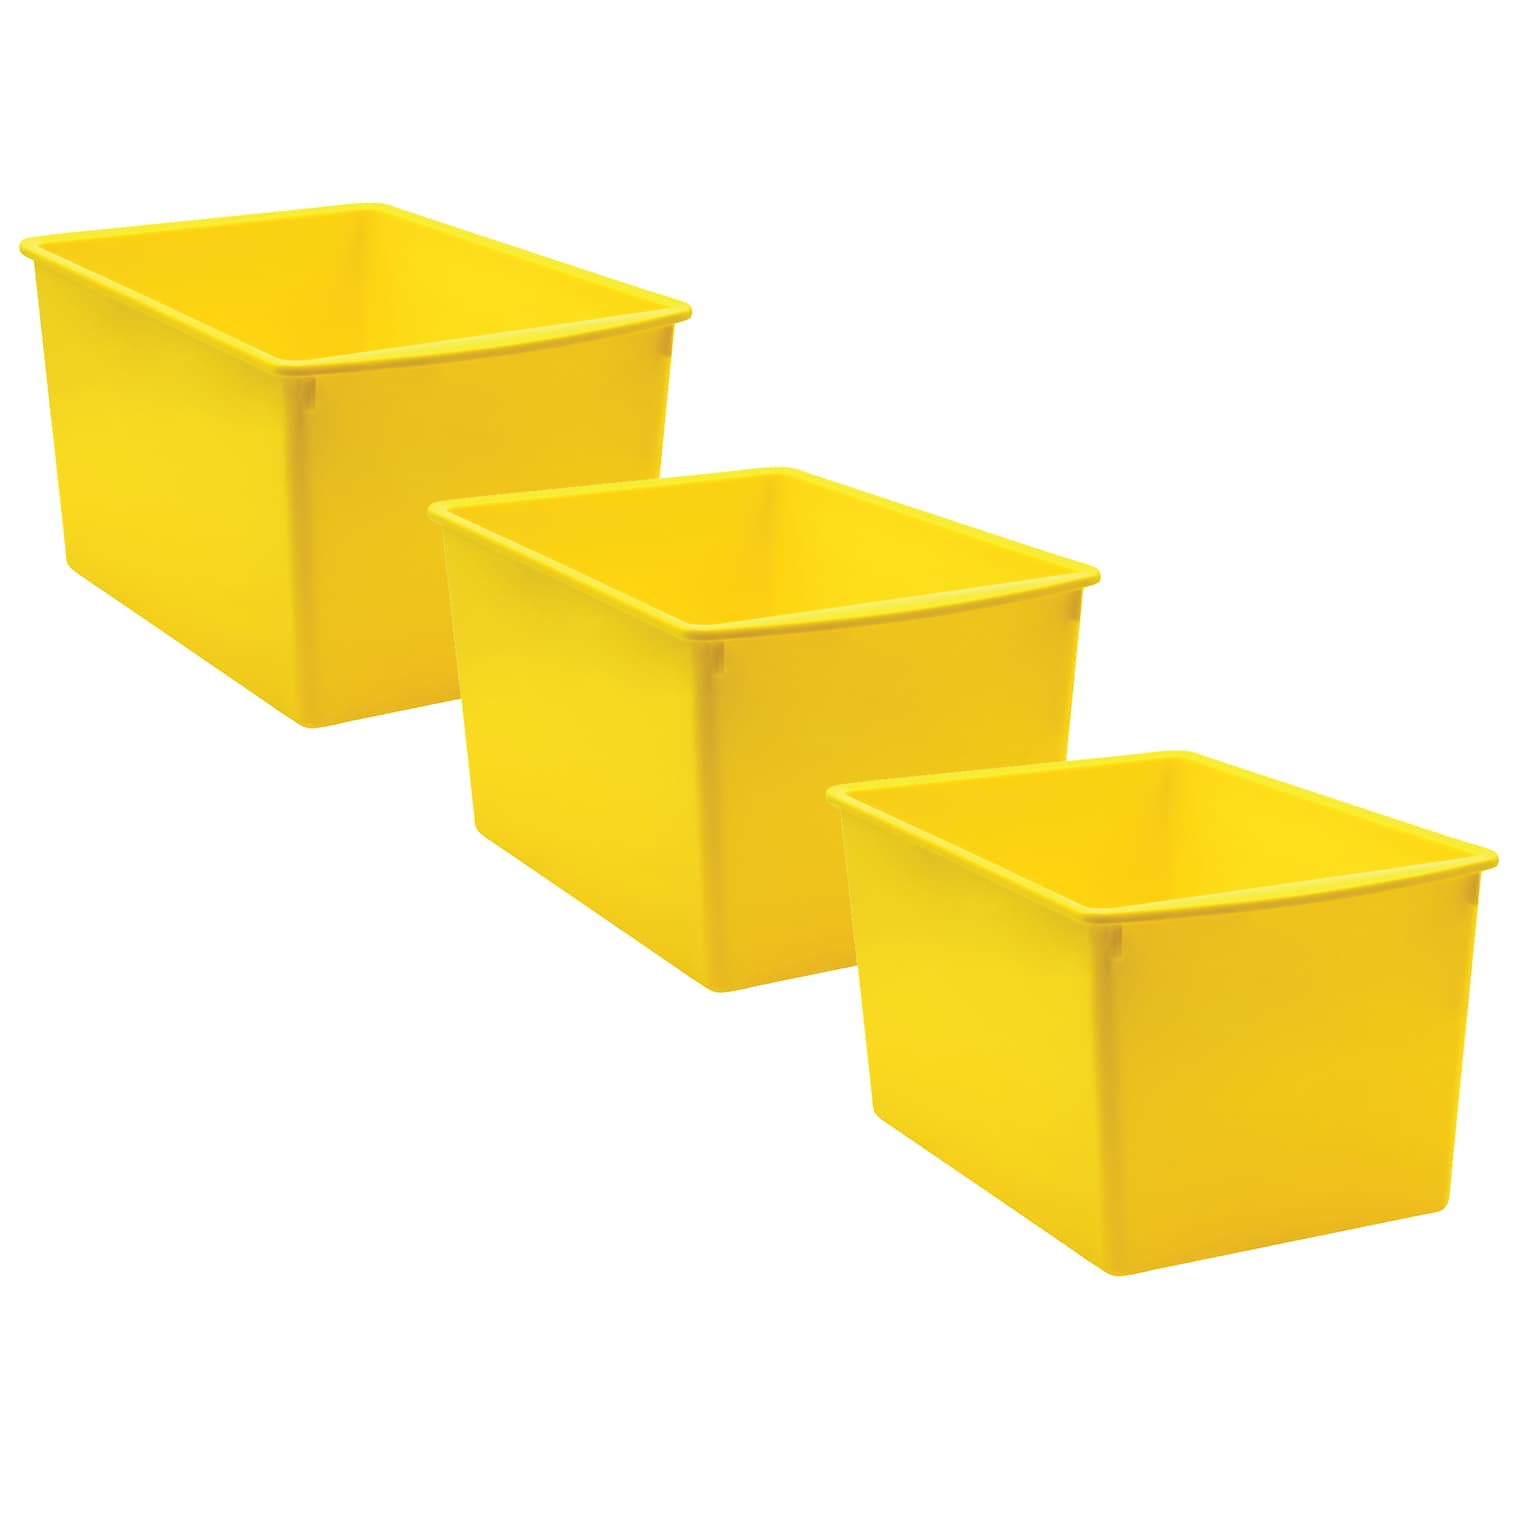 Teacher Created Resources® Plastic Multi-Purpose Bin, 14 x 9.25 x 7.5, Yellow, Pack of 3 (TCR20431-3)